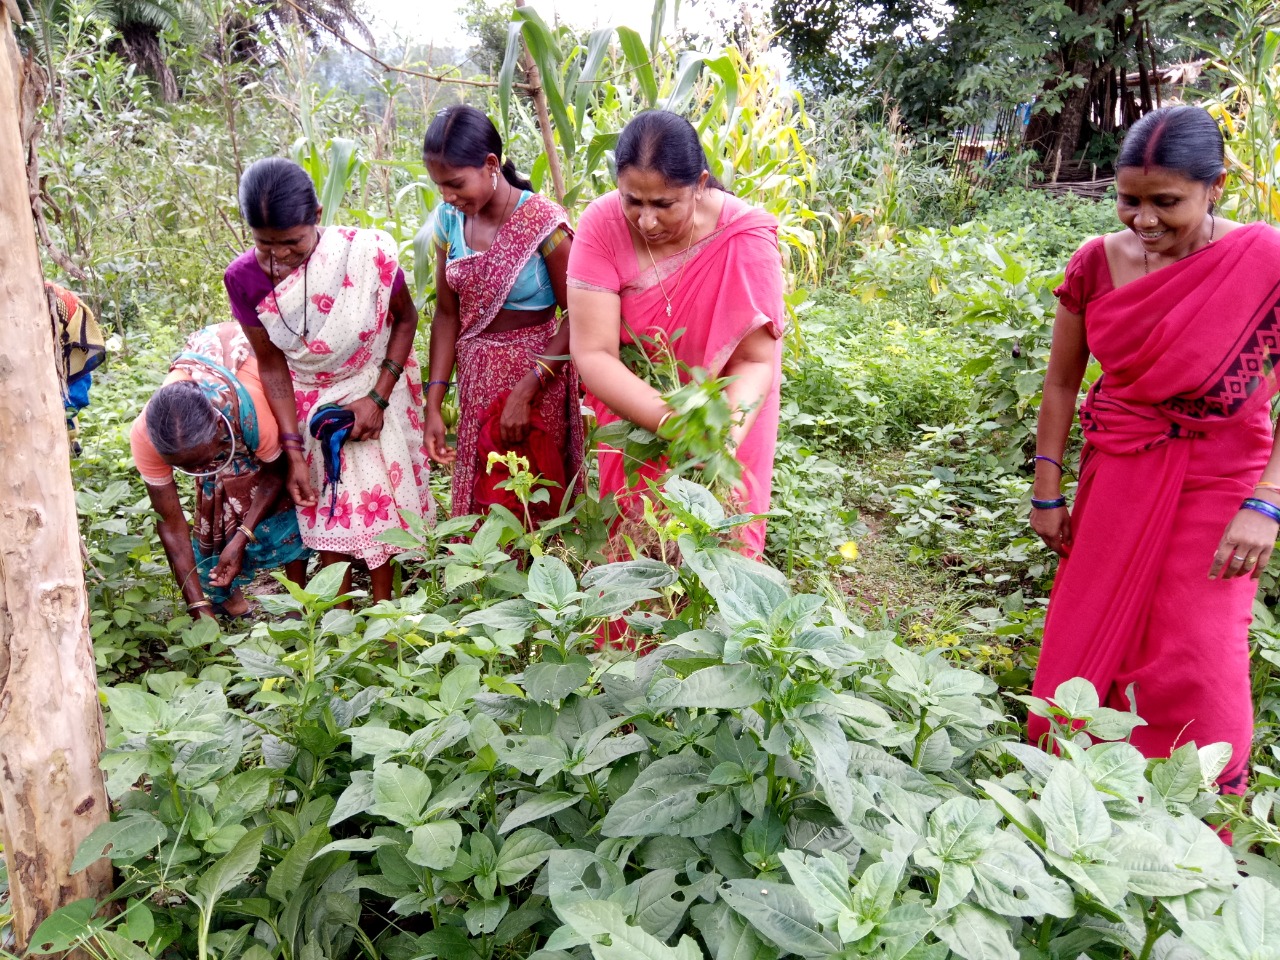 India women gathering plants